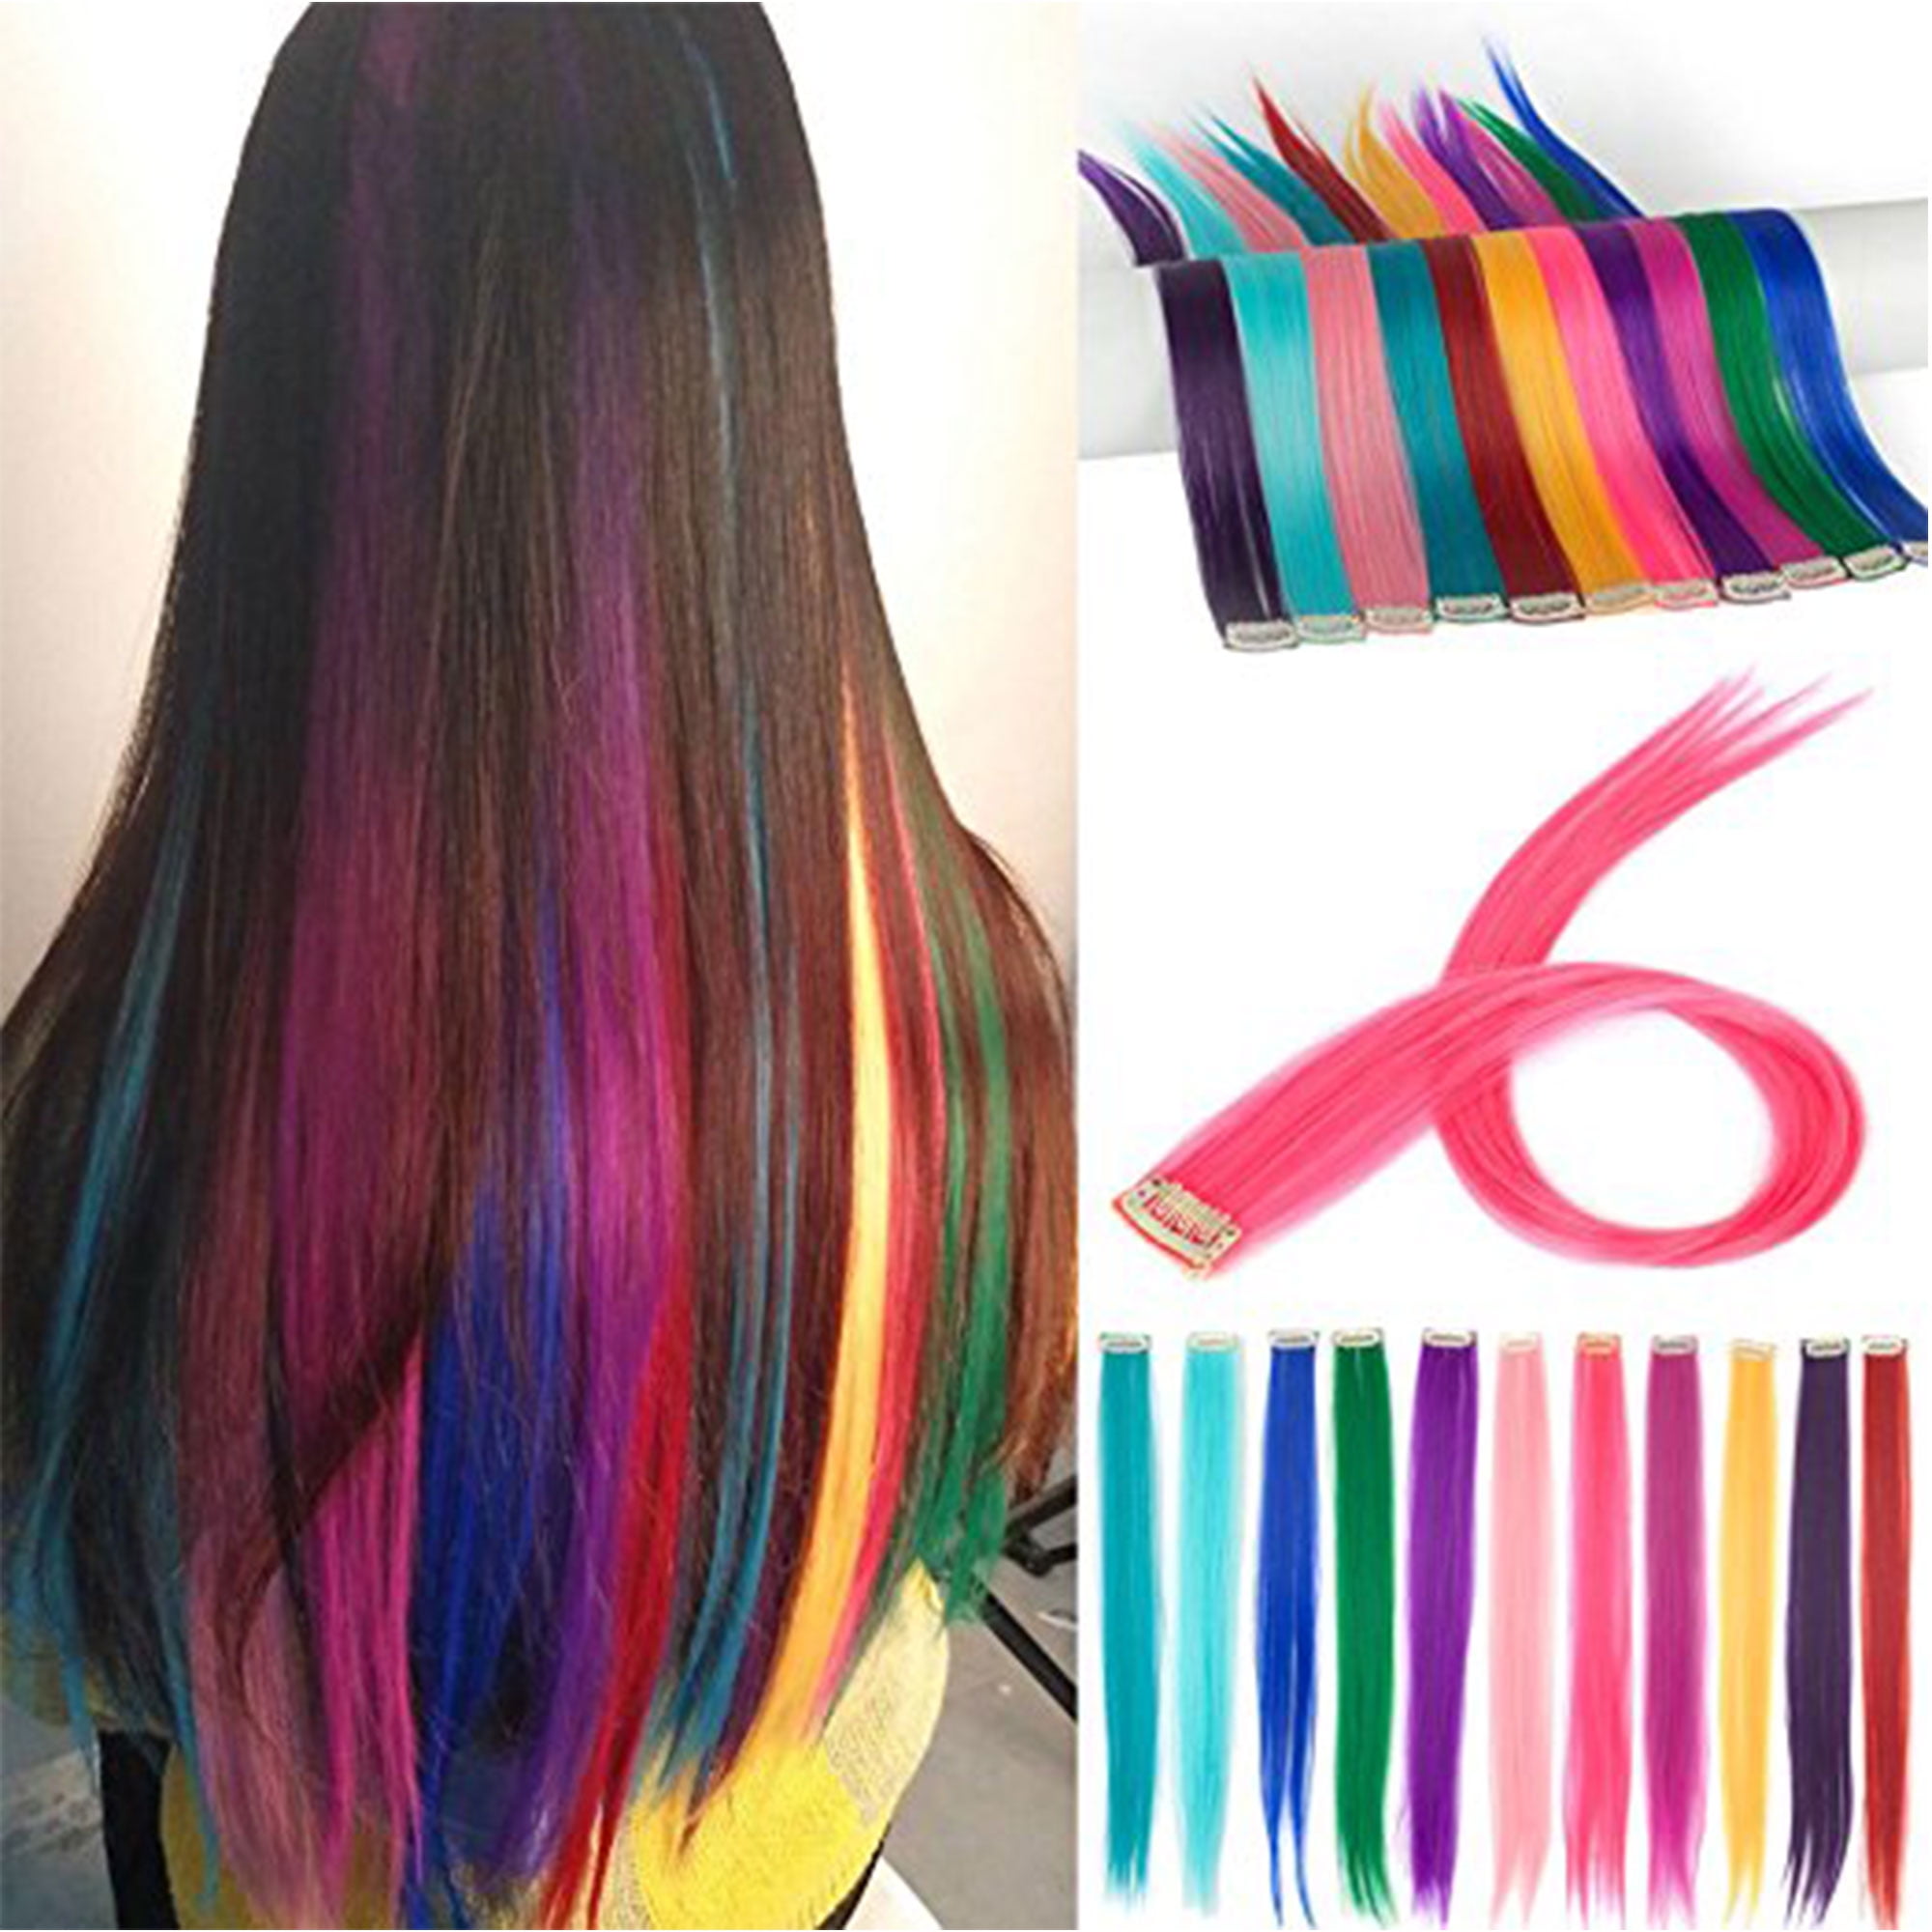 Installing Colored Hair Extensions  Walker Tape  Colored hair extensions  Hair extensions tutorial Hair color streaks